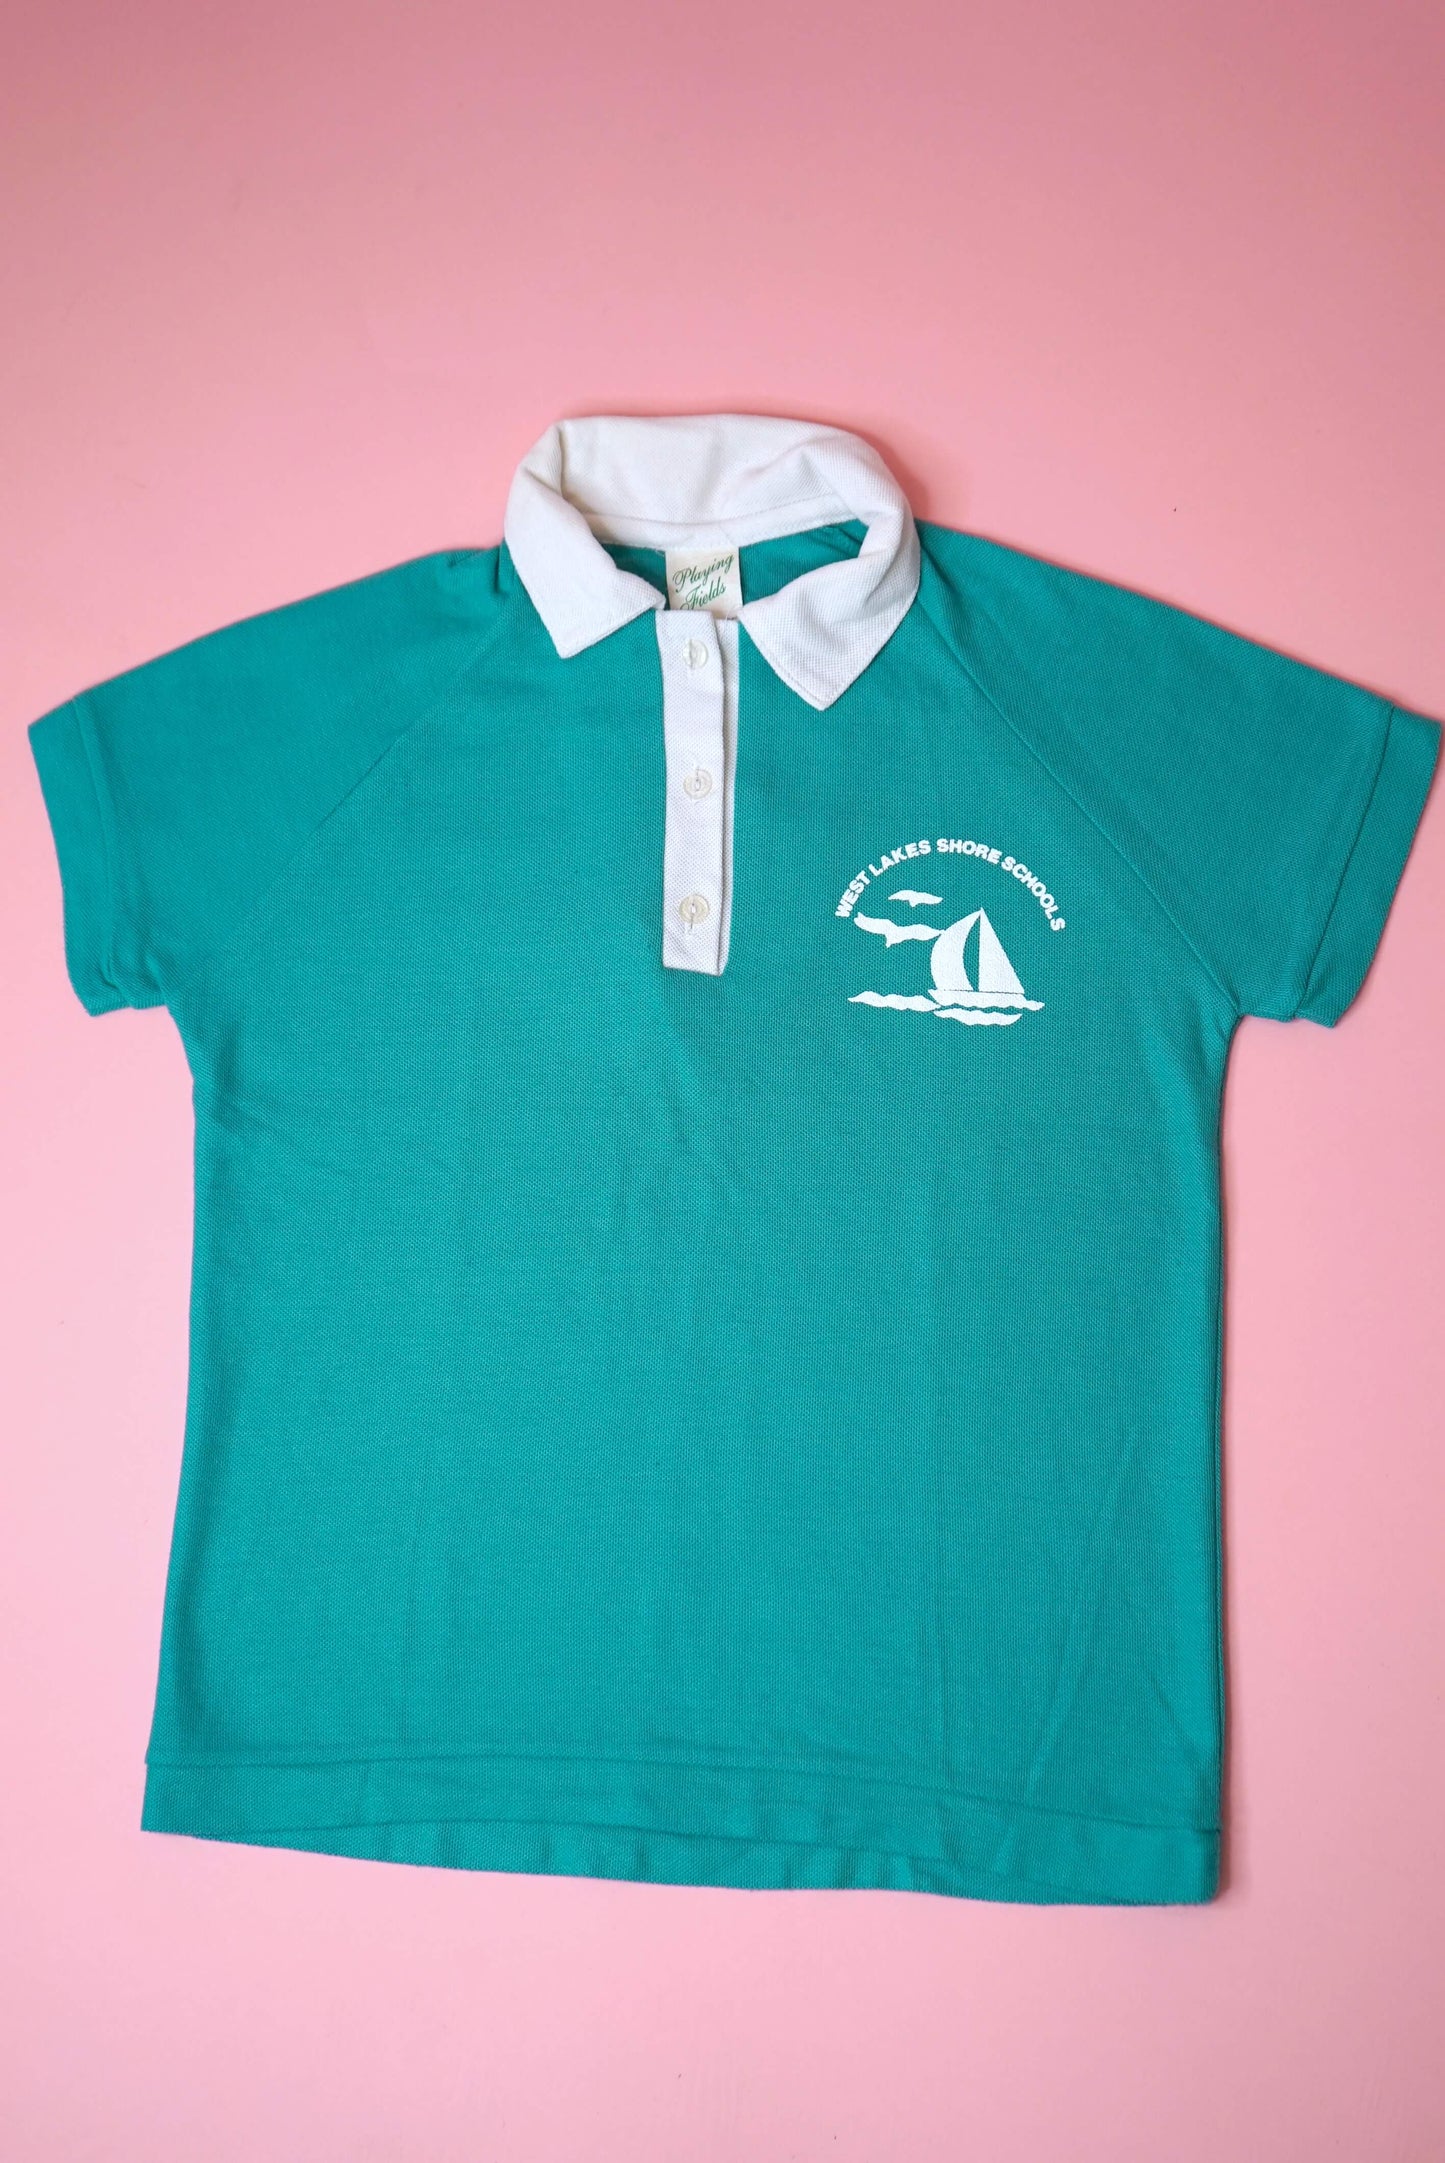 Baby T Shirt Polo Shirt Retro Golf Tennis T Shirt Vintage 90s Size S-M